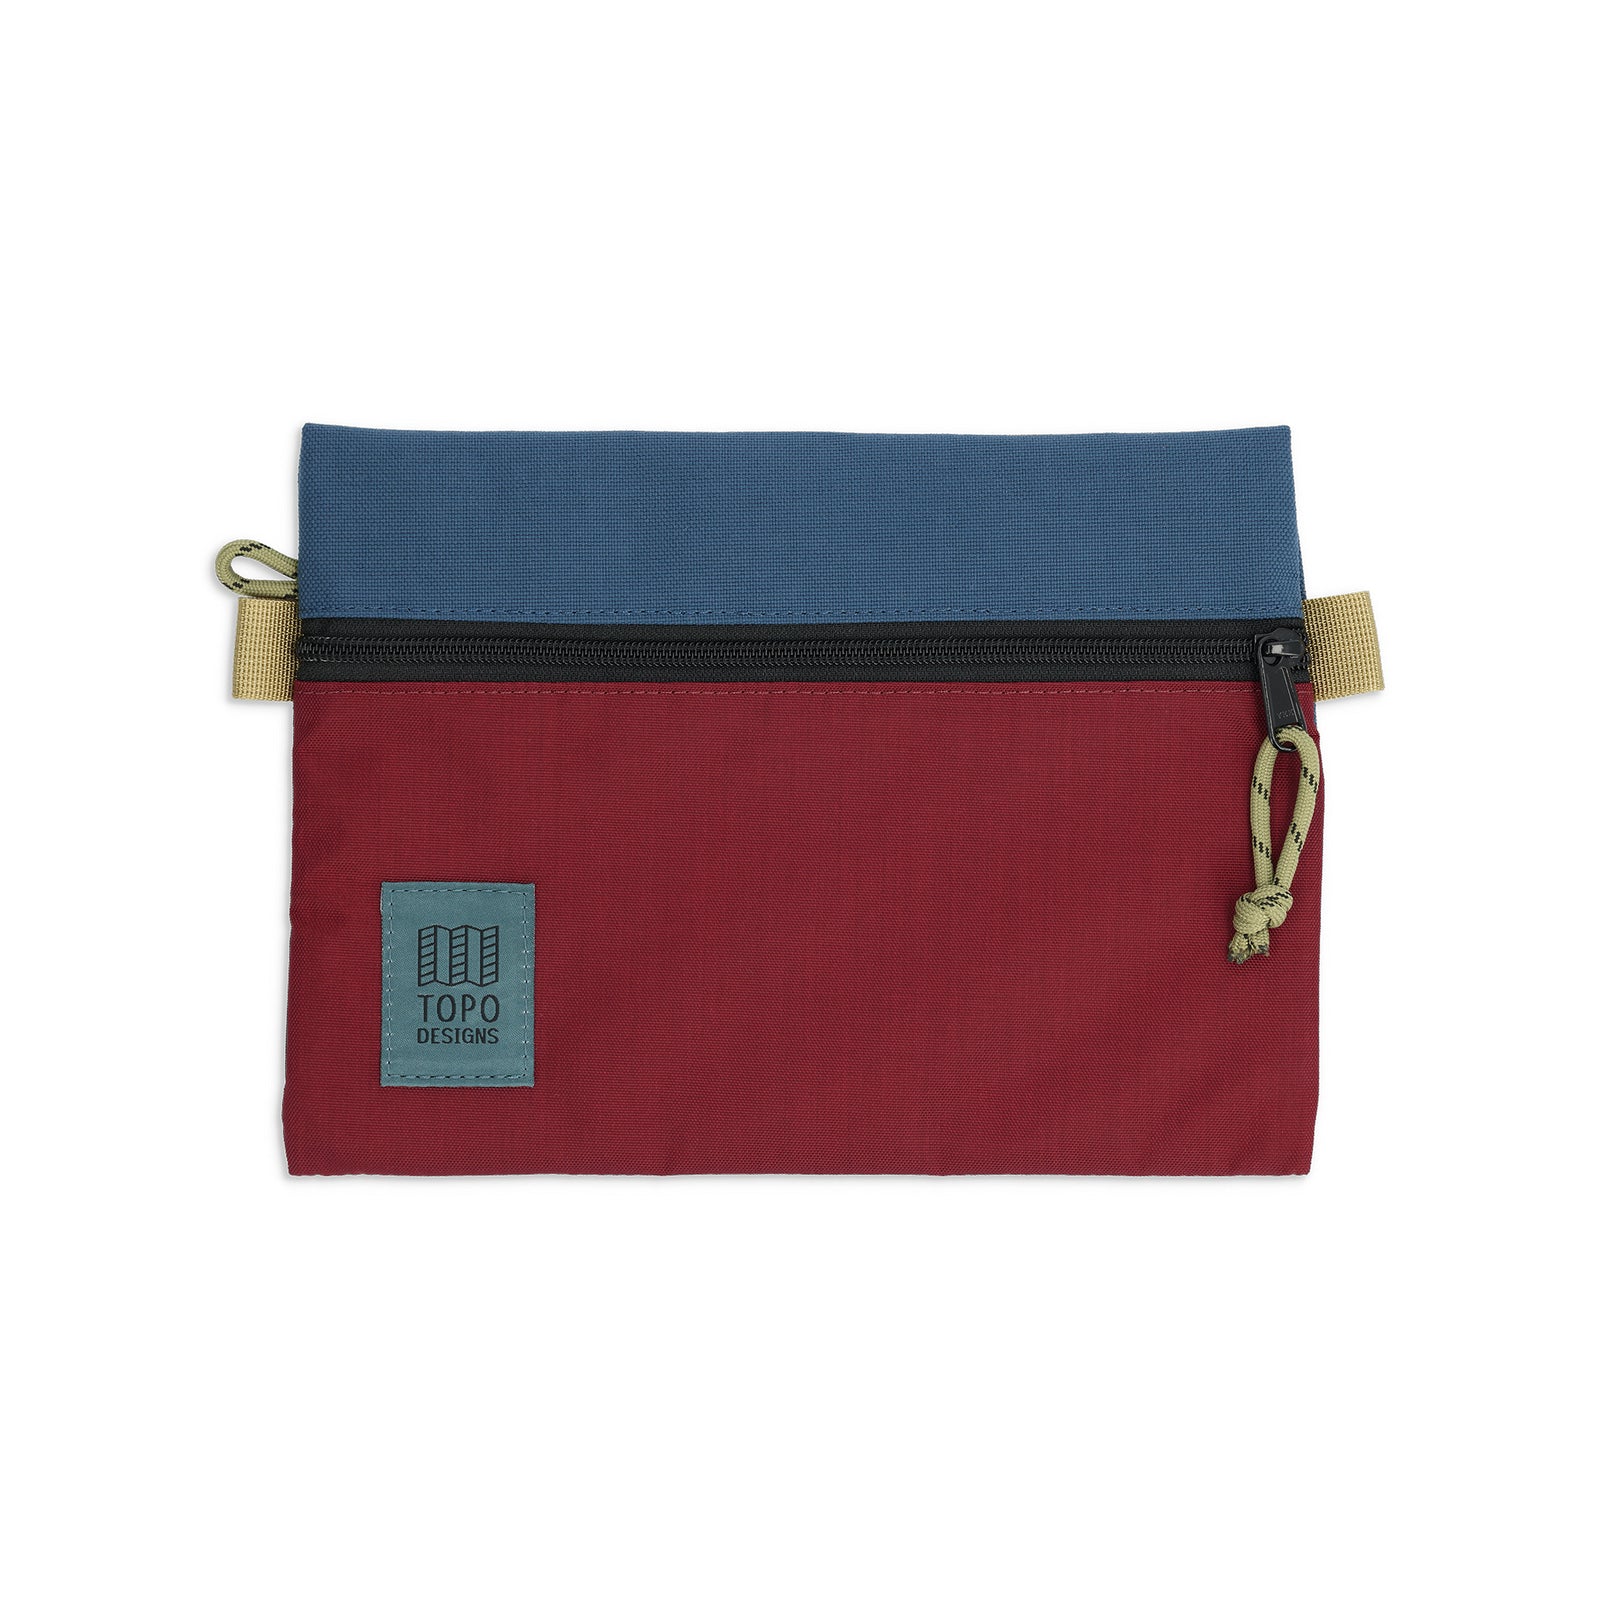 Front View of Topo Designs Accessory Bags in "Medium" "Dark Denim / Burgundy"